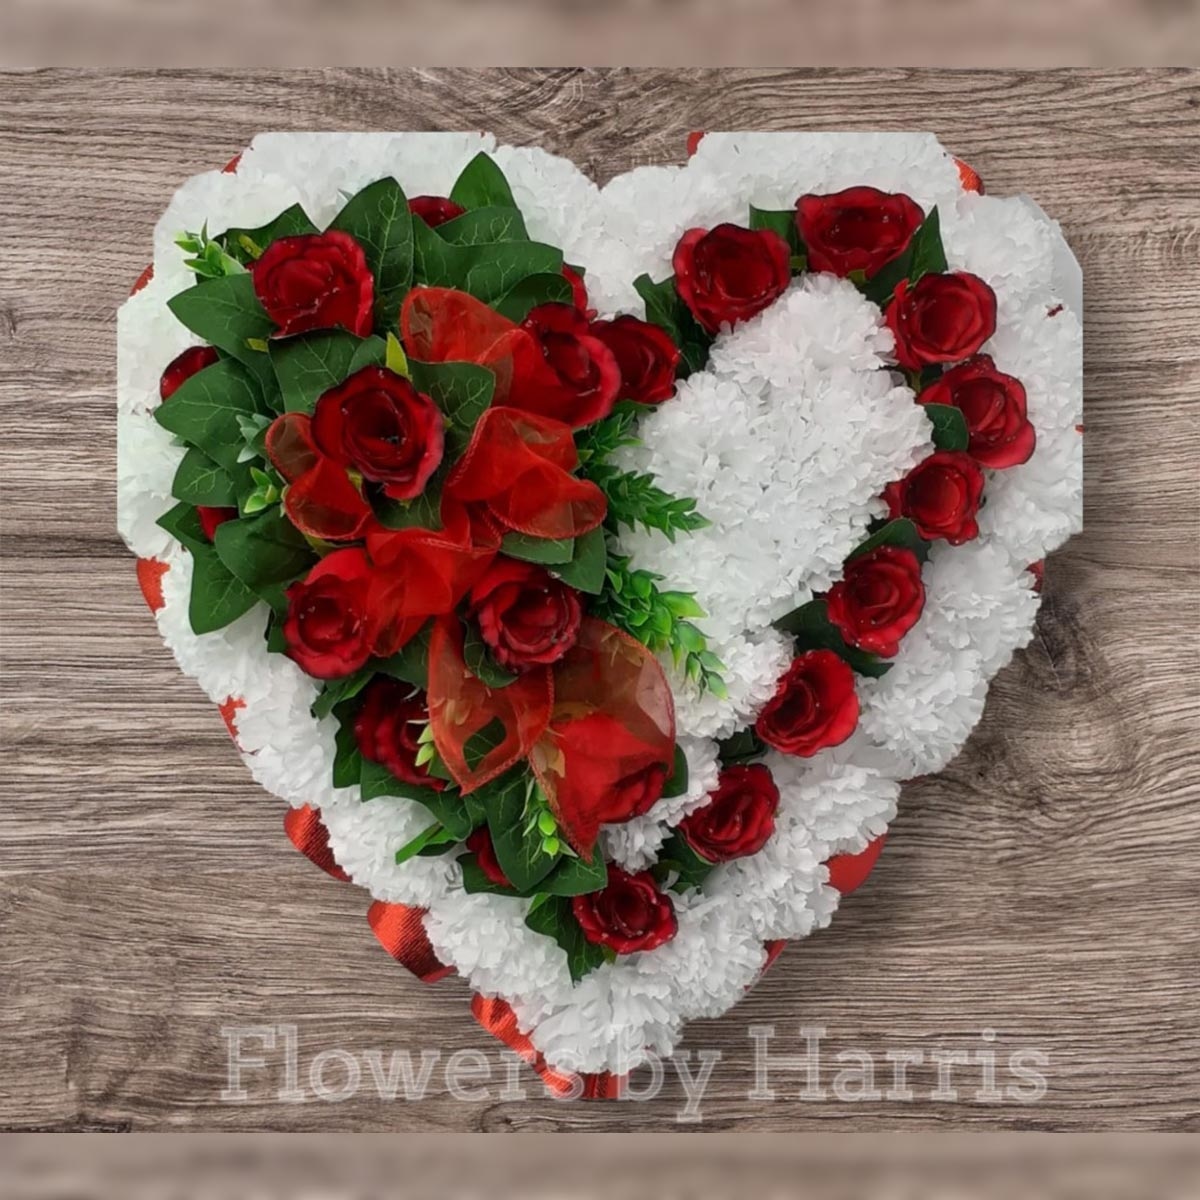 Silk Red and White Heart Flower Arrangement